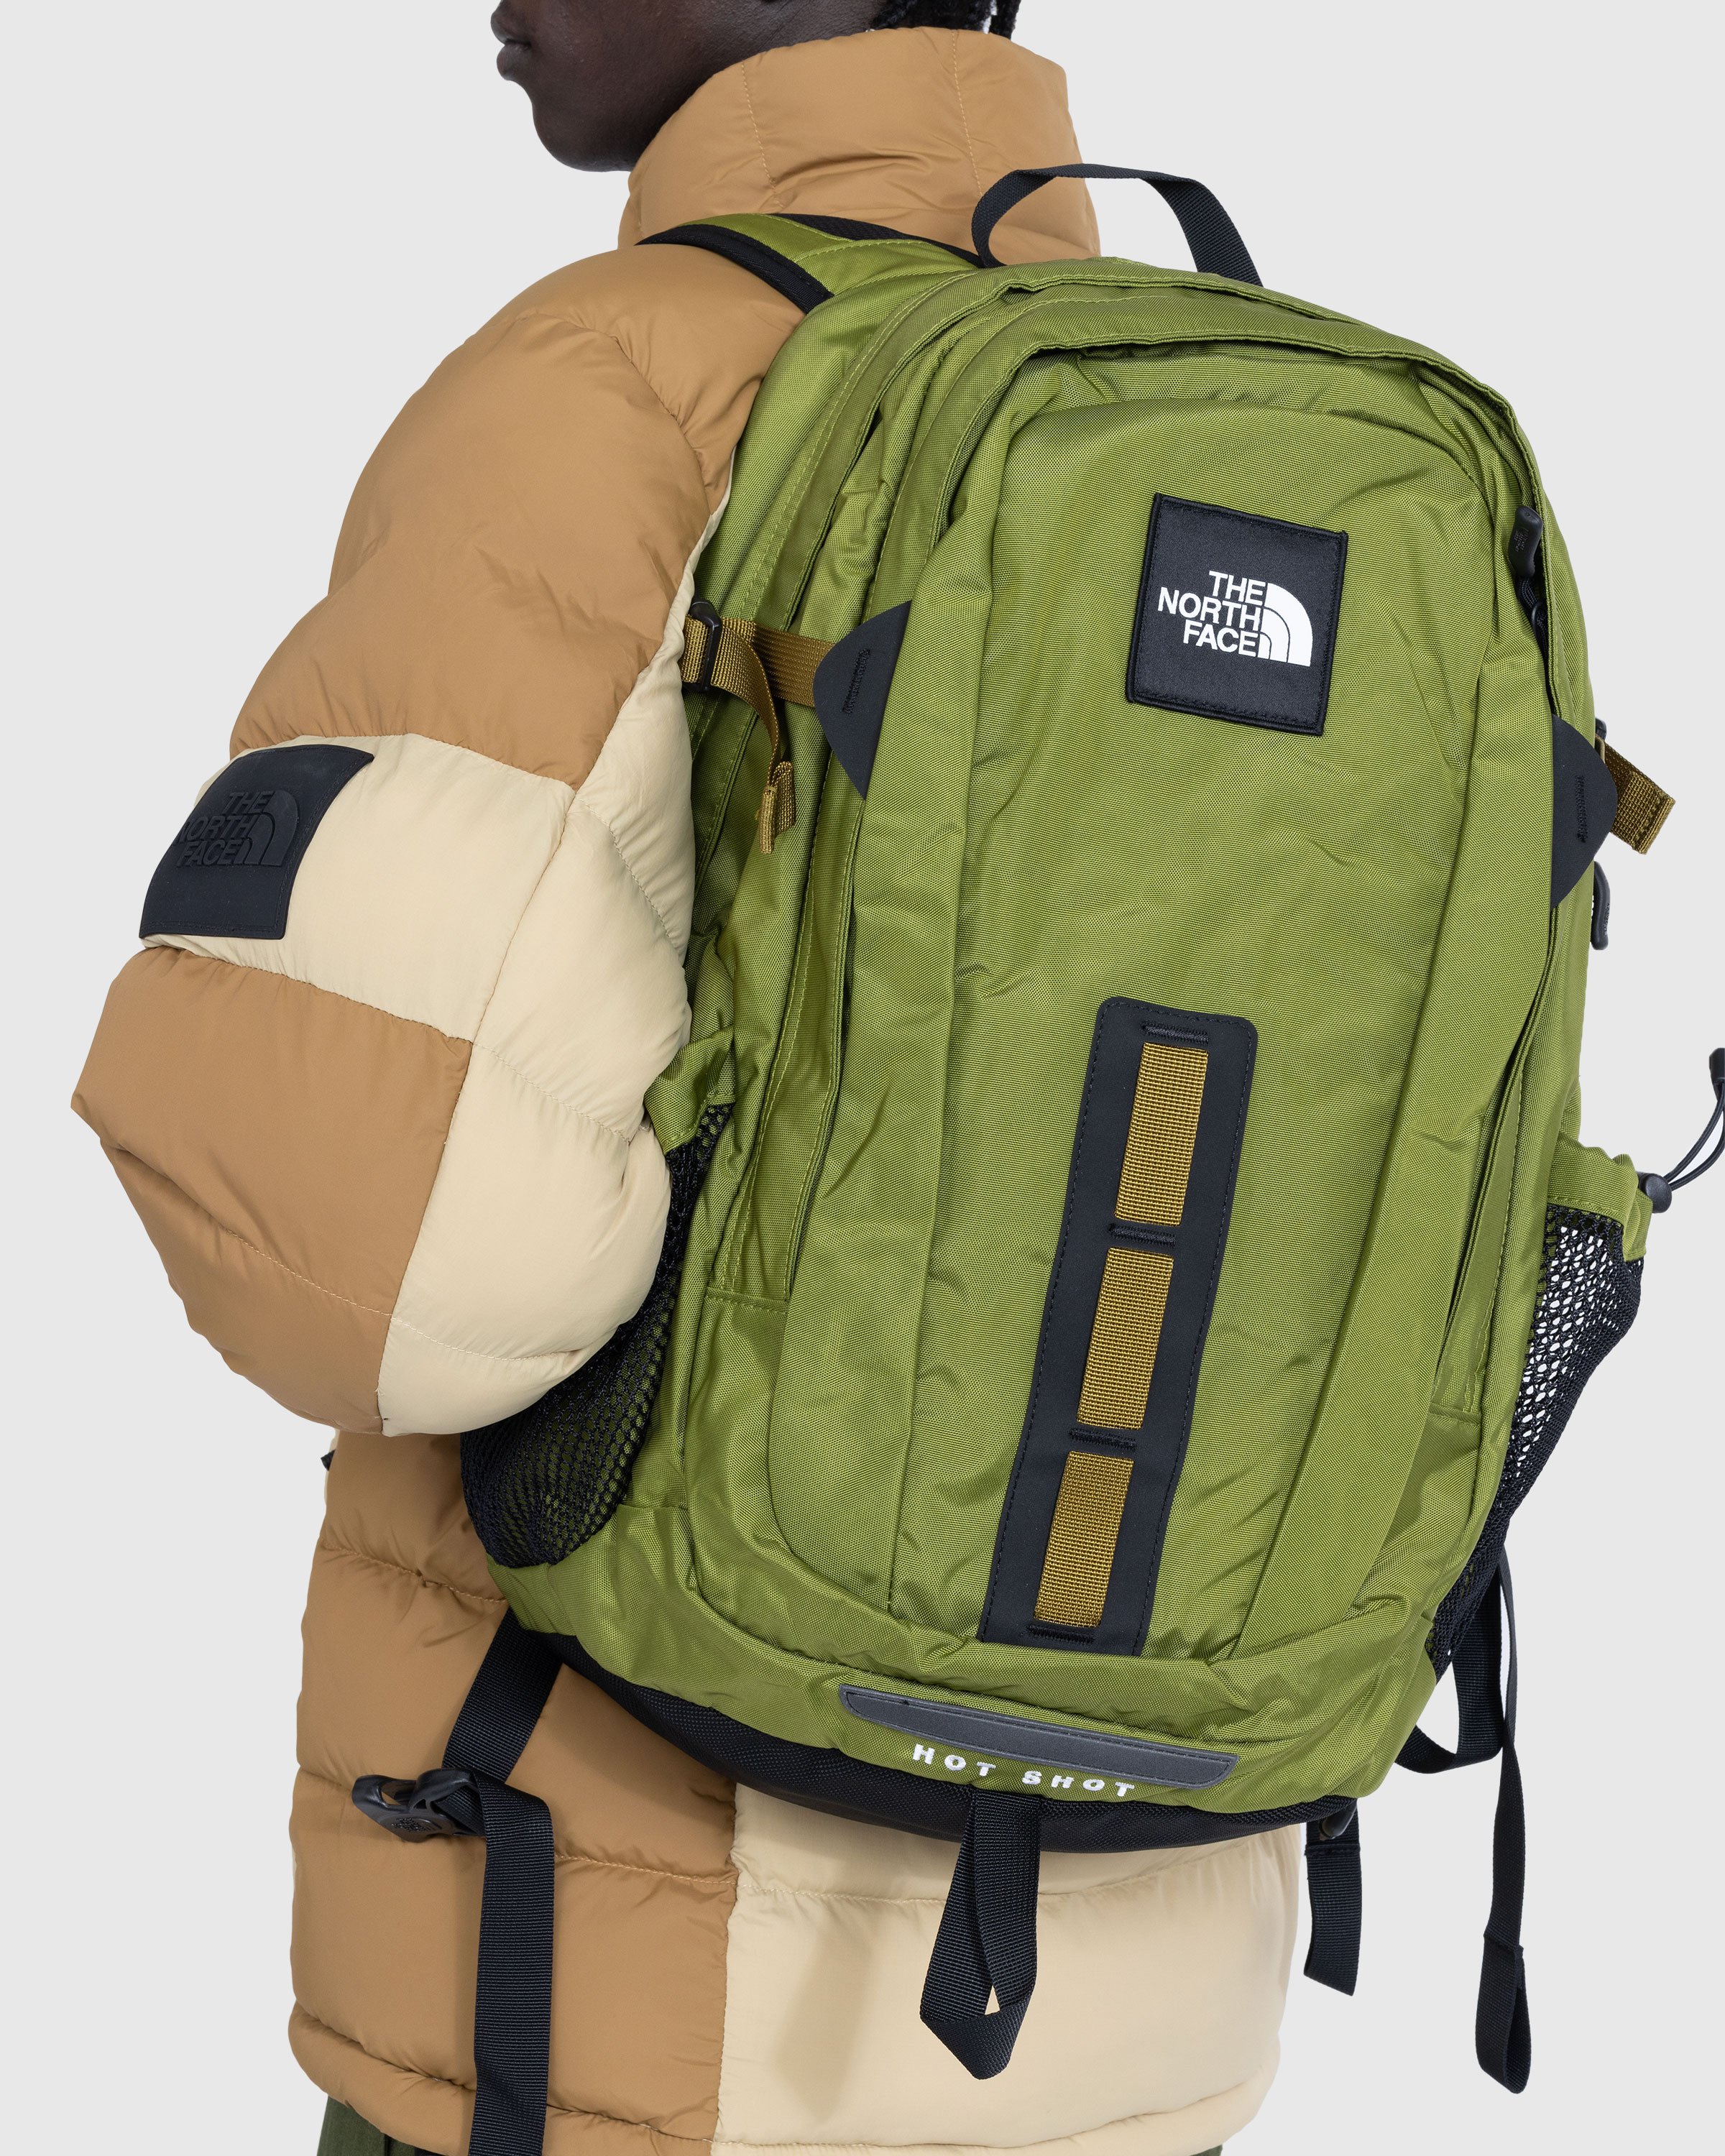 The North Face - Hot Shot Backpack Calla Green/Fir Green - Accessories - Green - Image 4